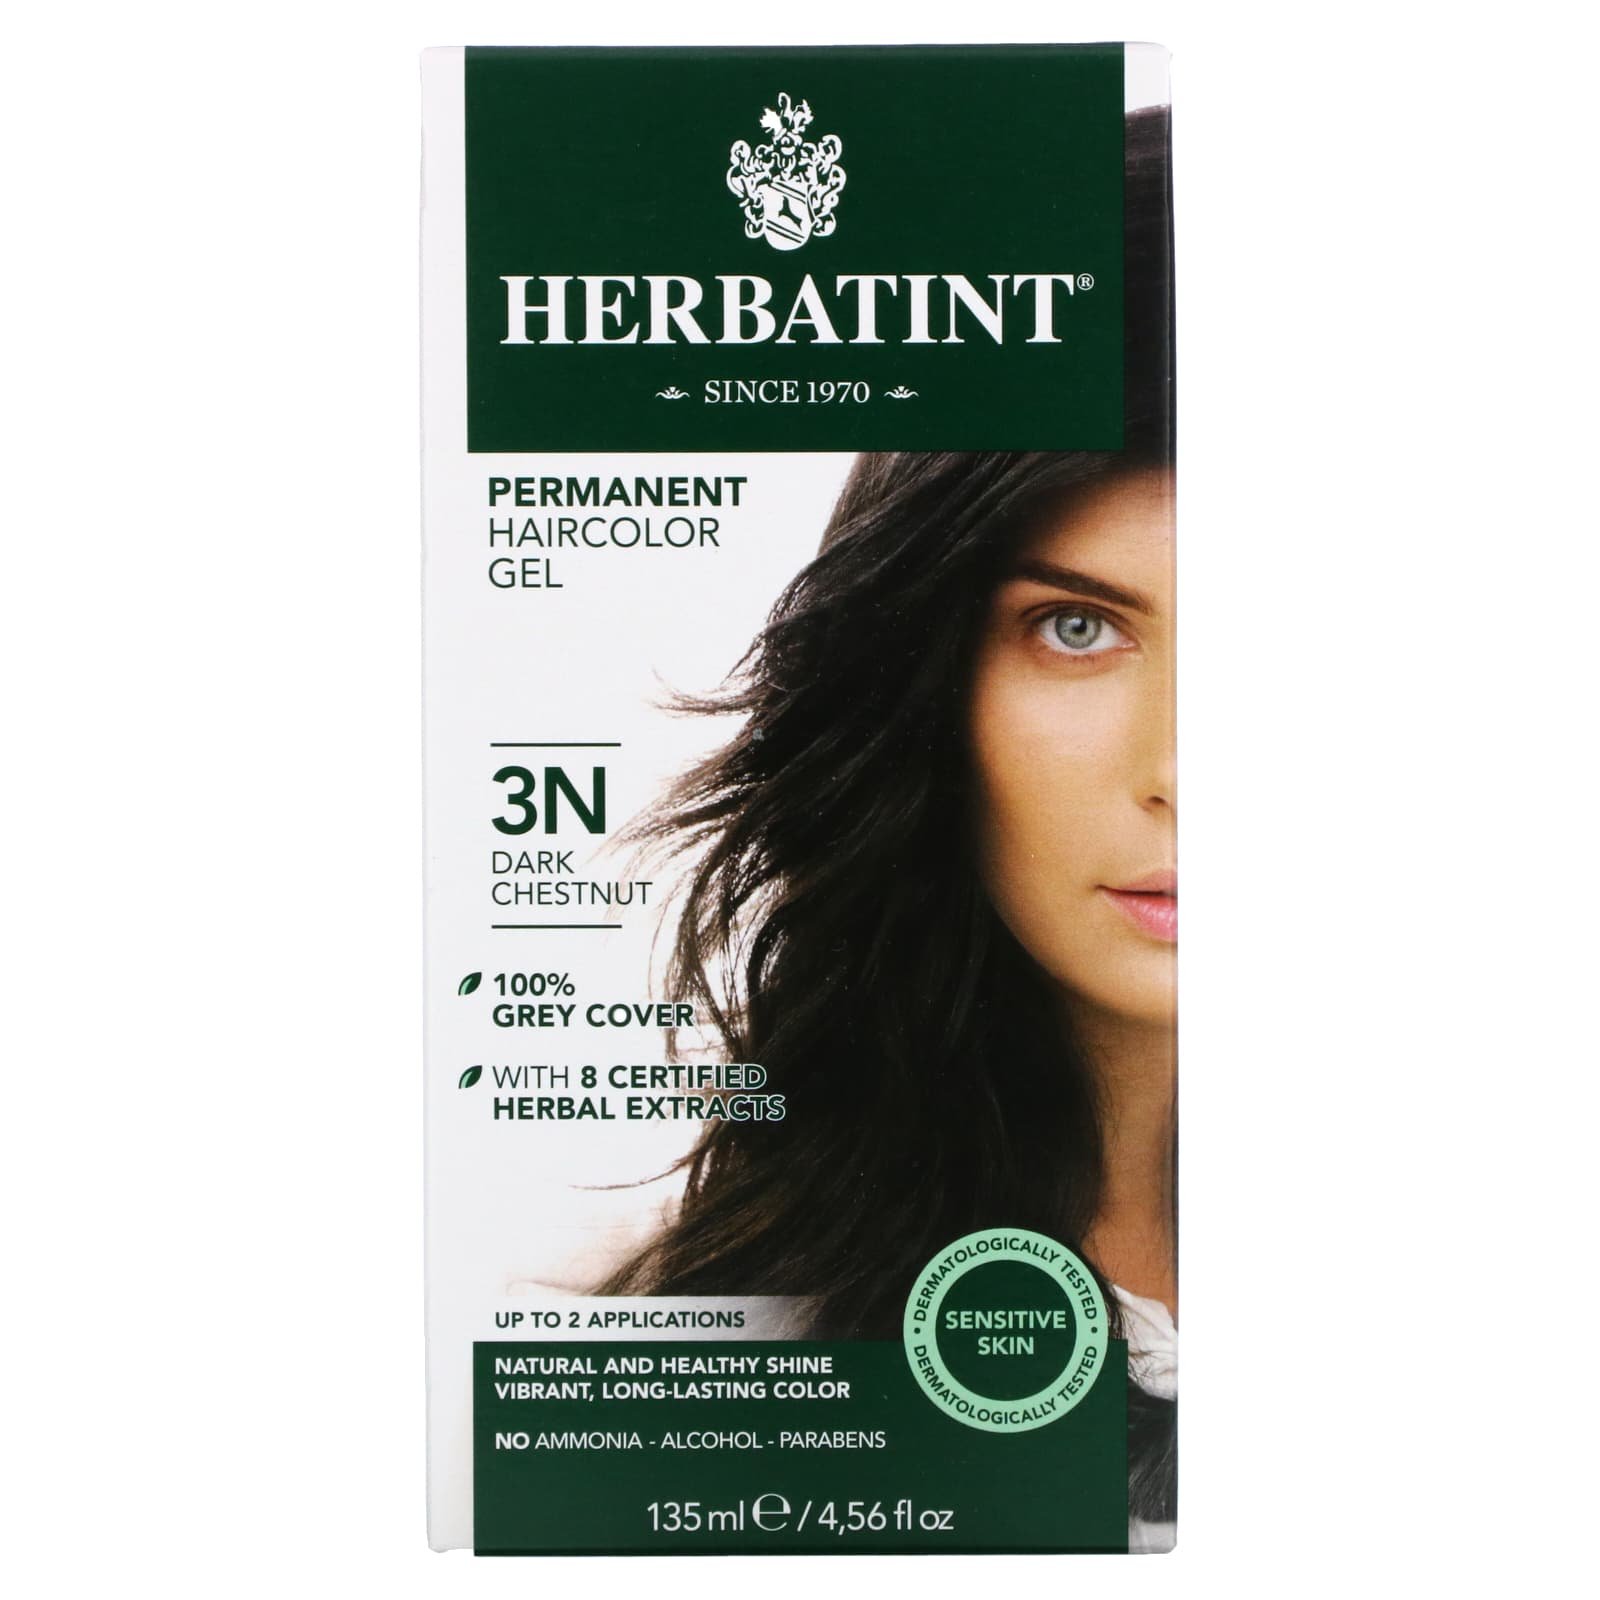 Herbatint Permanent Haircolor Gel 3N Dark Chestnut Price